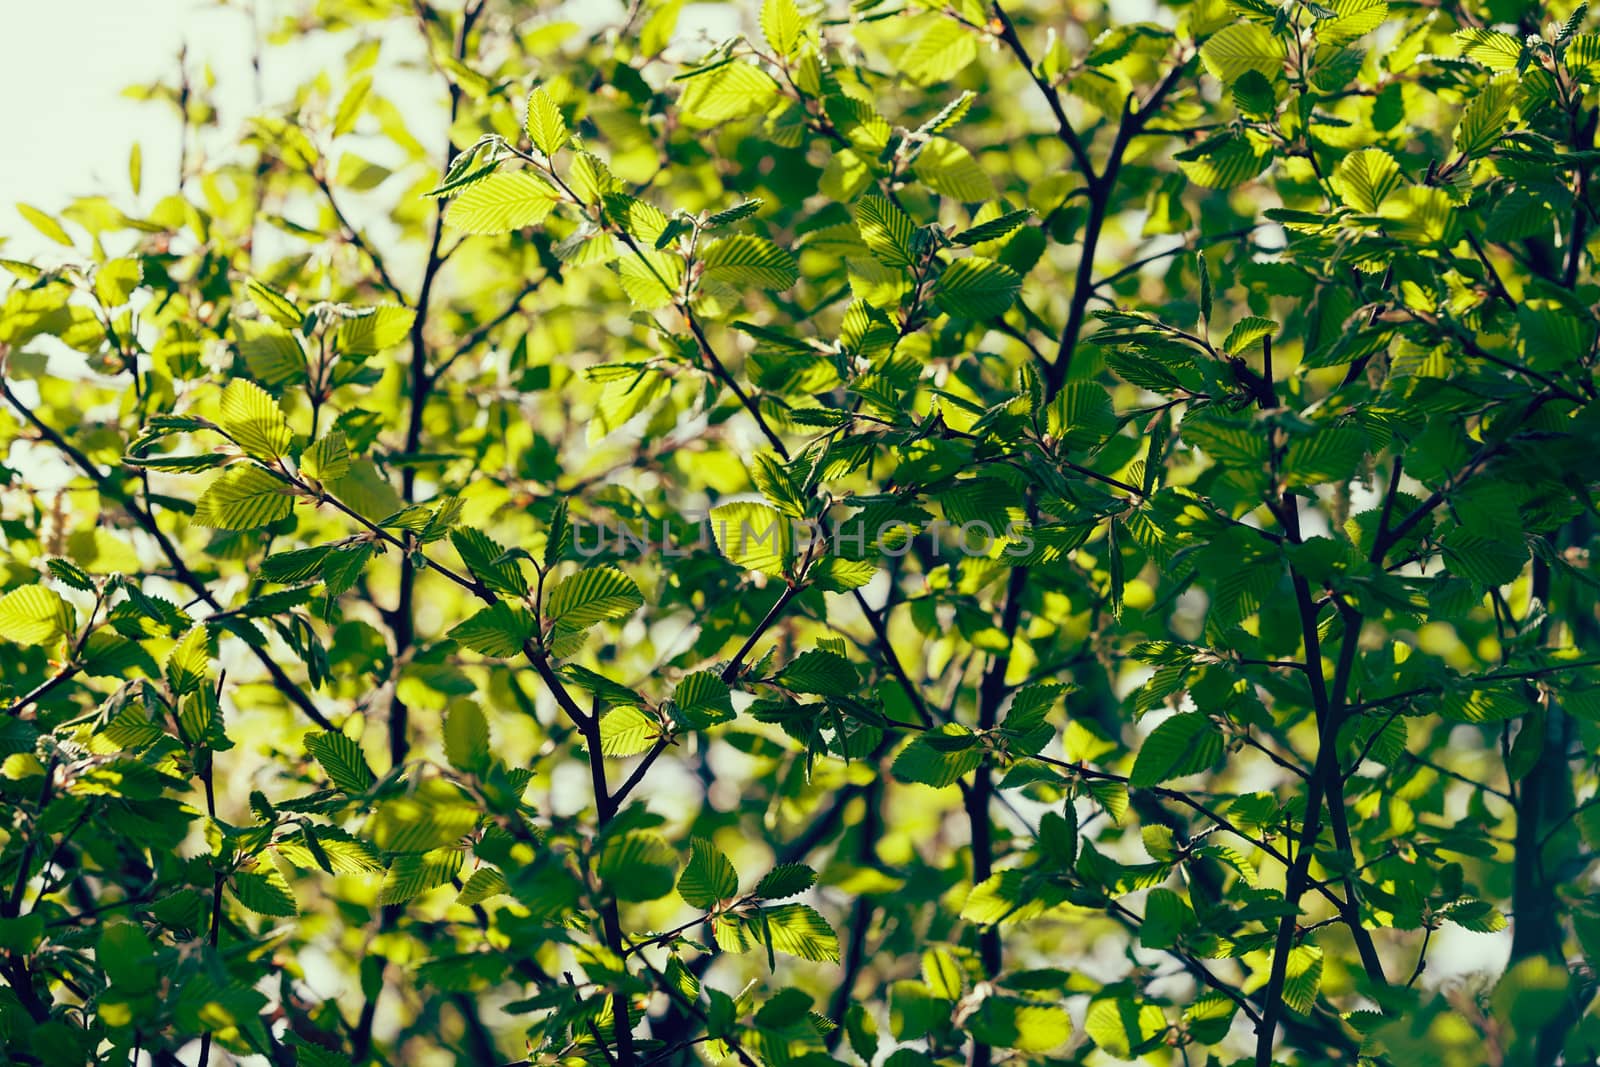 focus on green leaves by vladimirnenezic